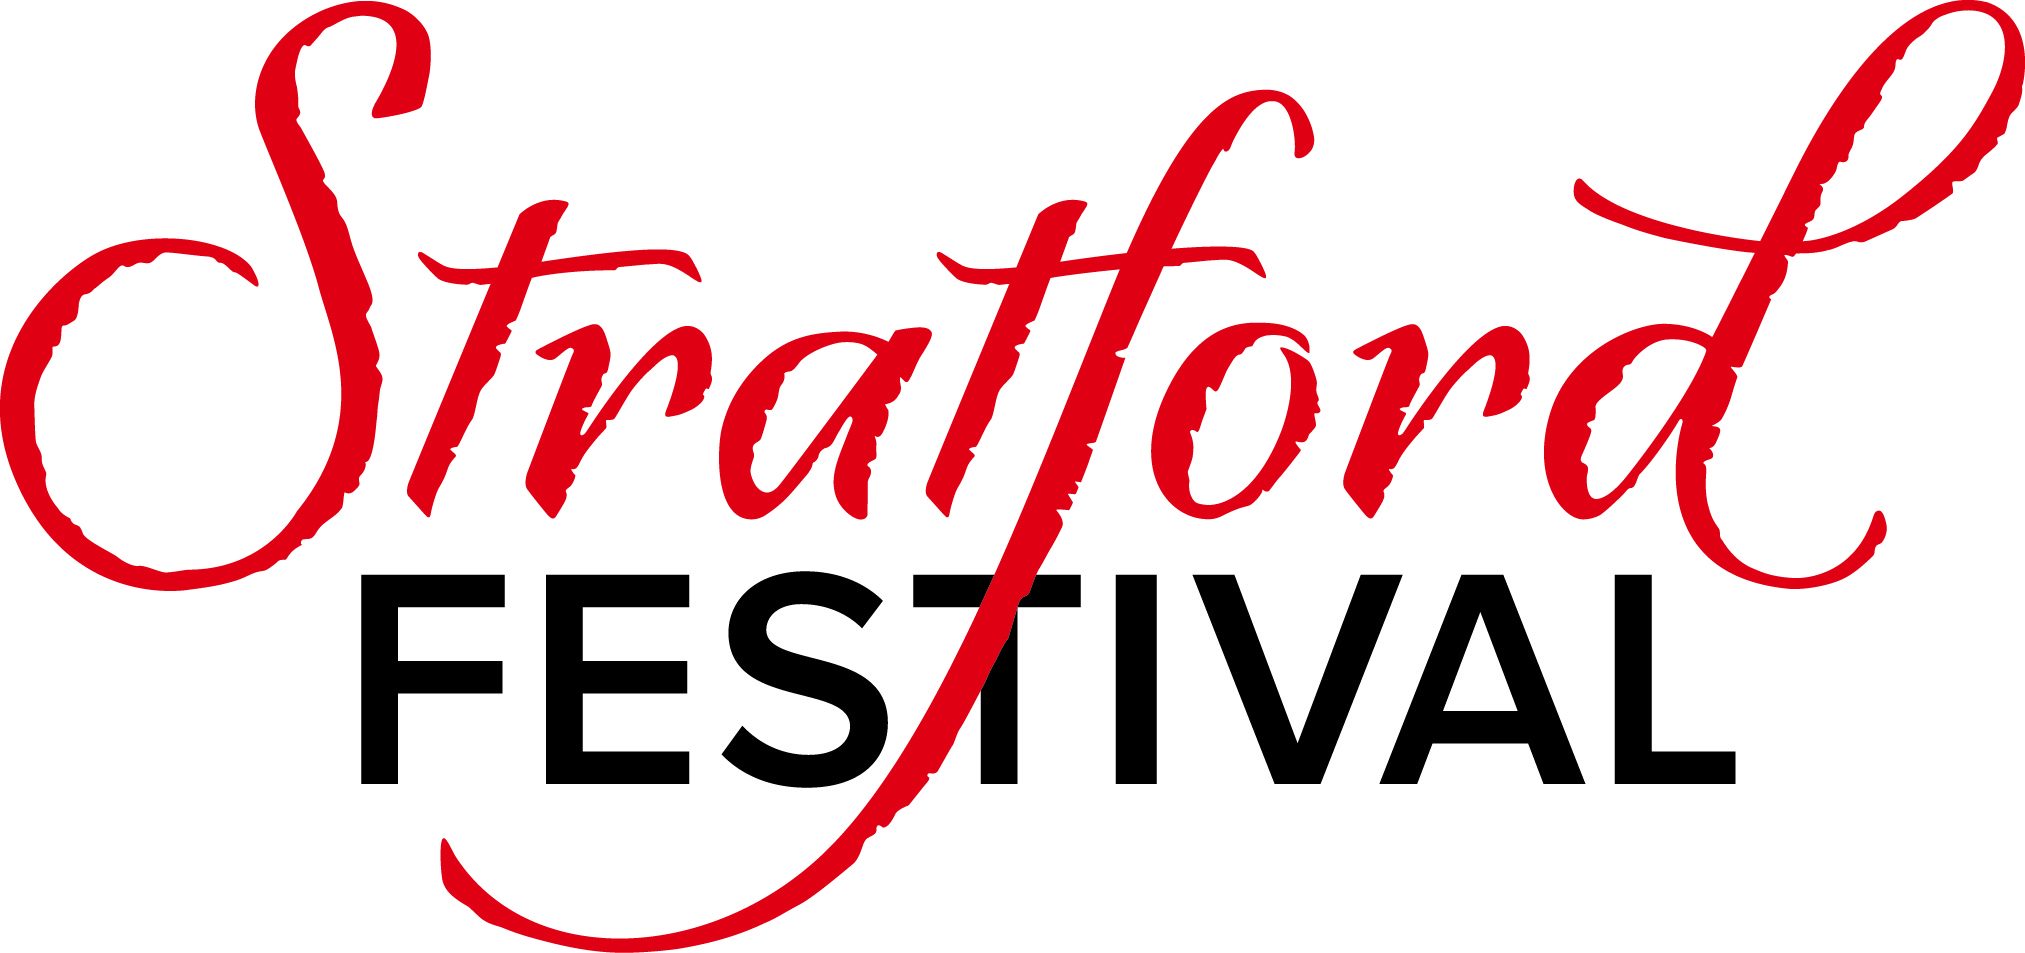 Stratford Festival wordmark in script font